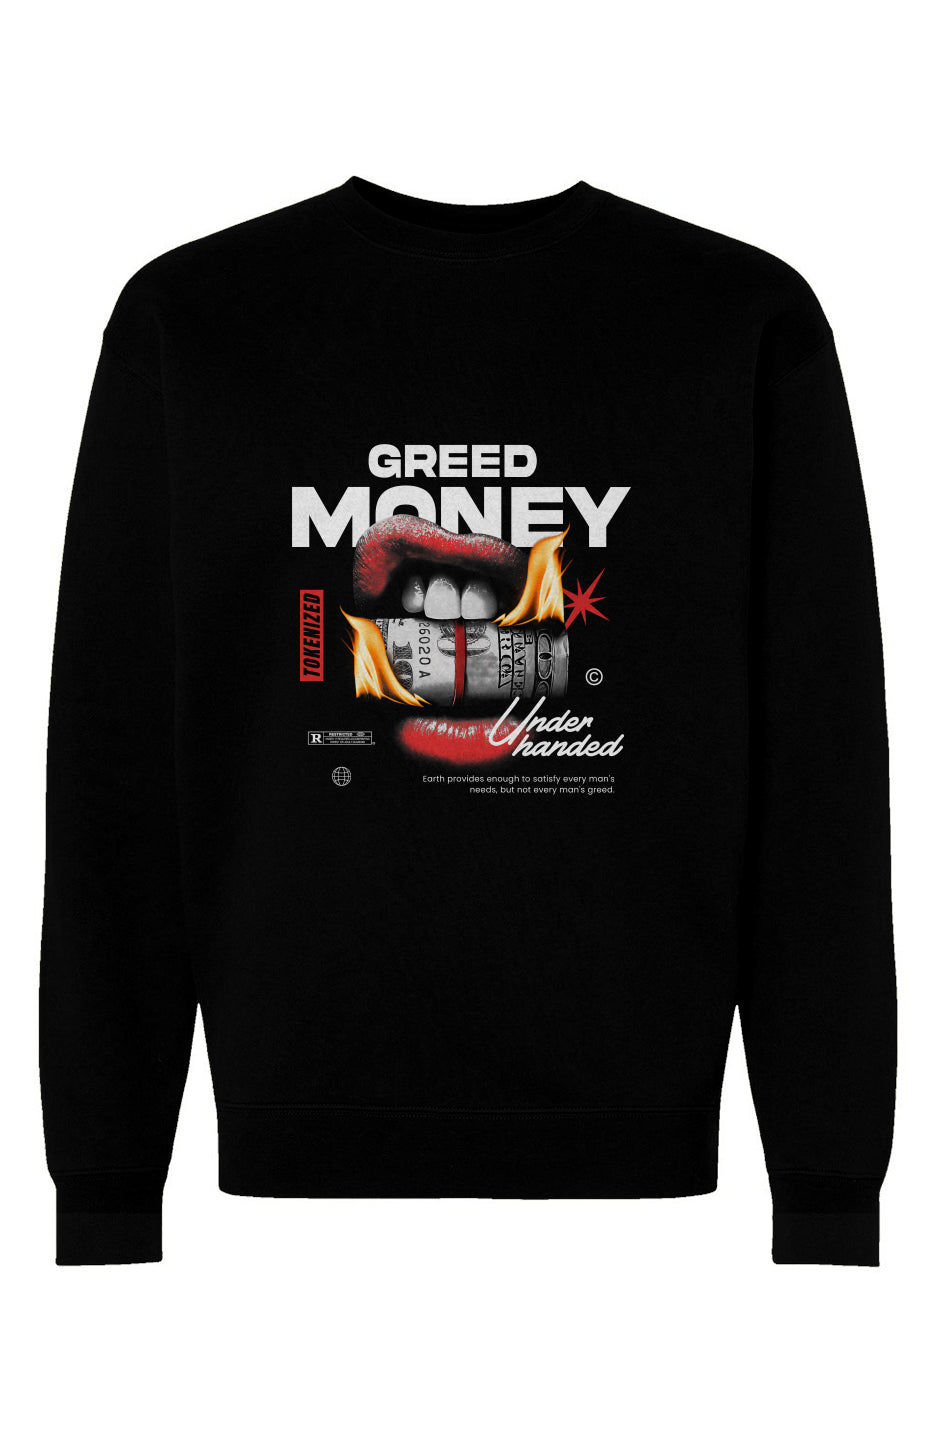 Greedy Money Sweatshirt